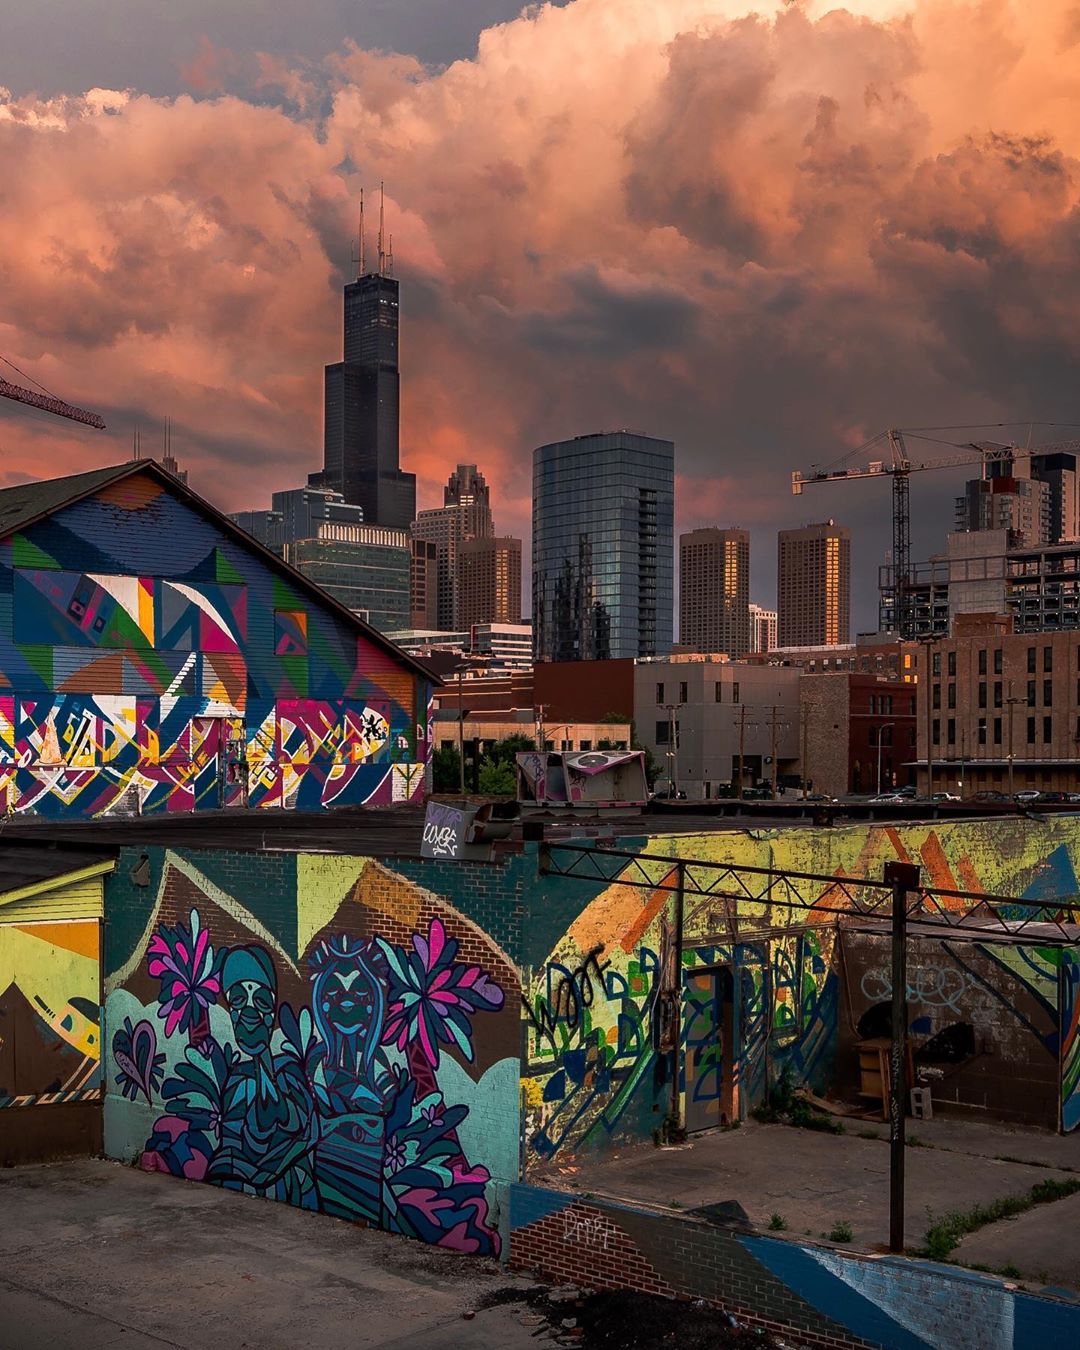 Улицы и архитектура Чикаго на снимках Эрика Марталера